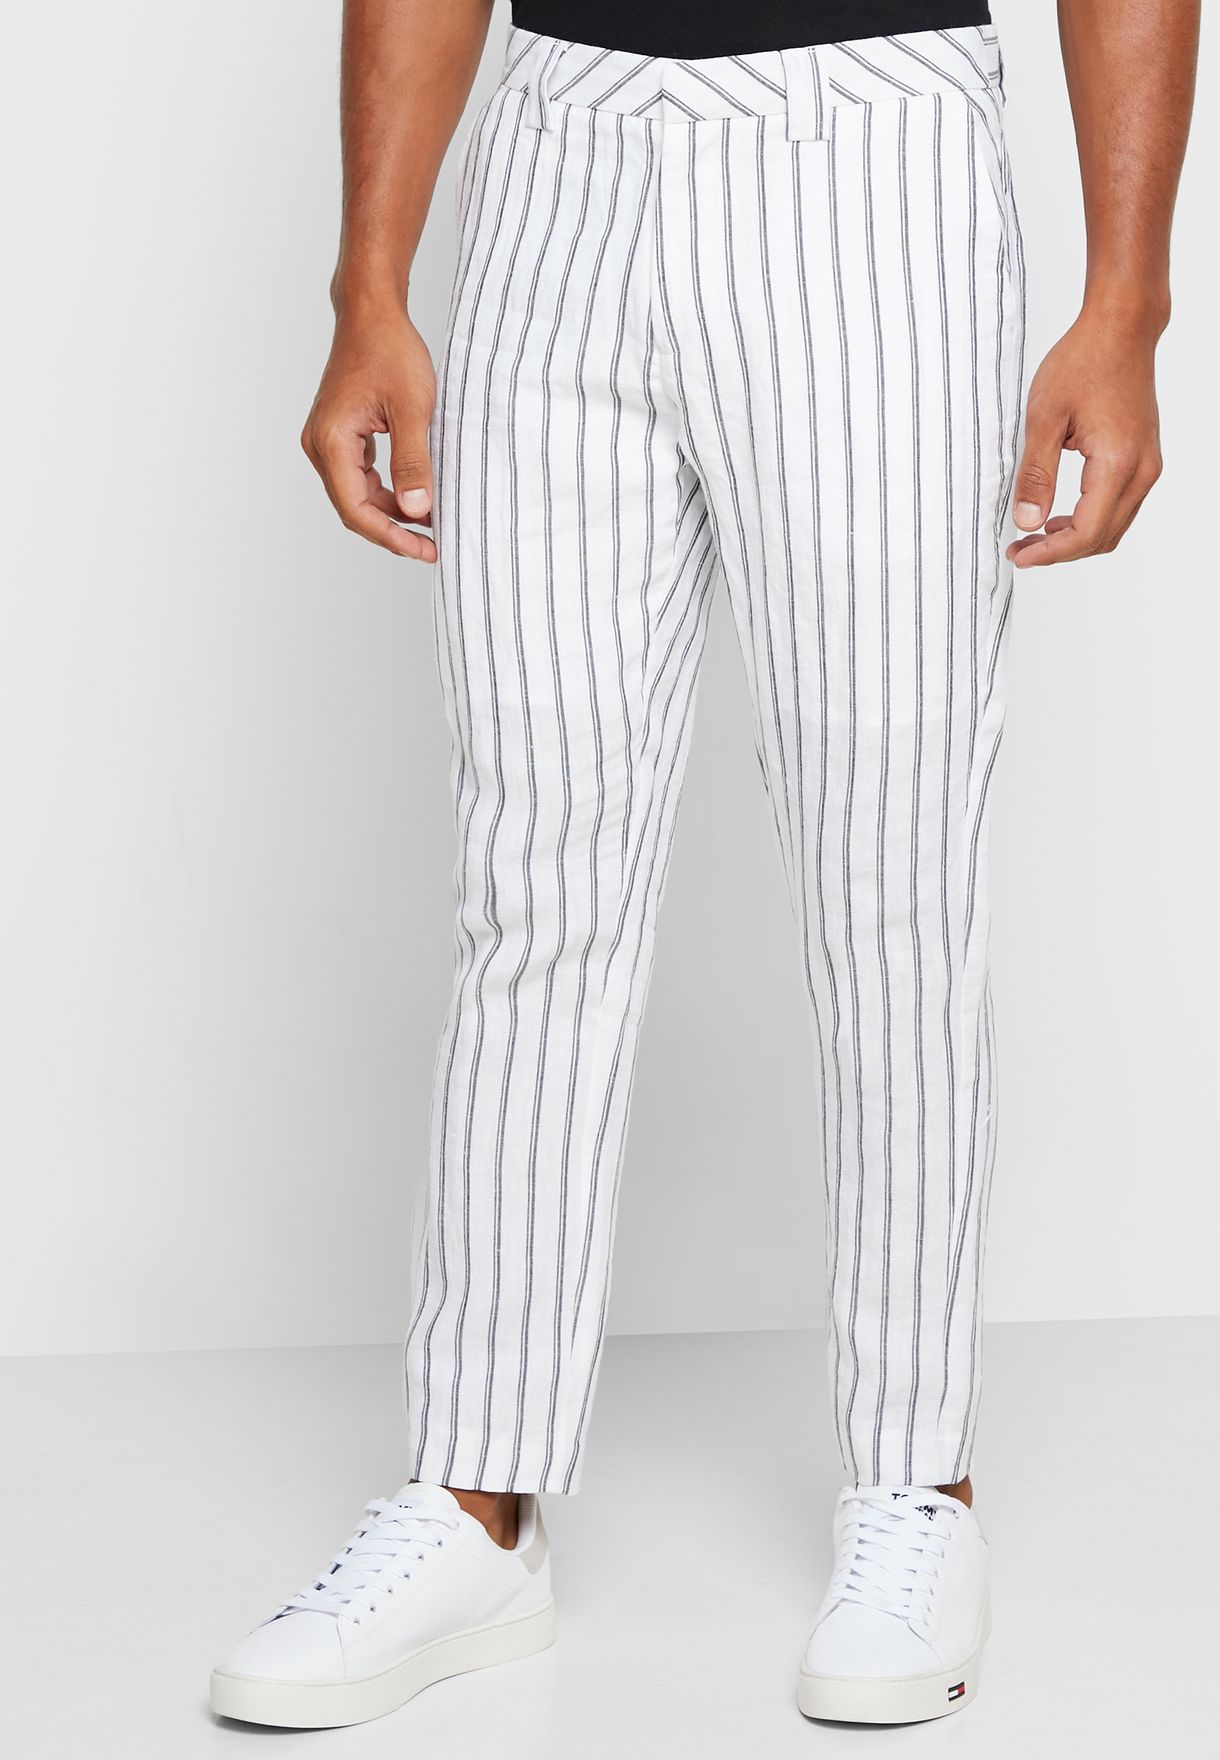 Buy Iconic stripes Striped Slim Fit 